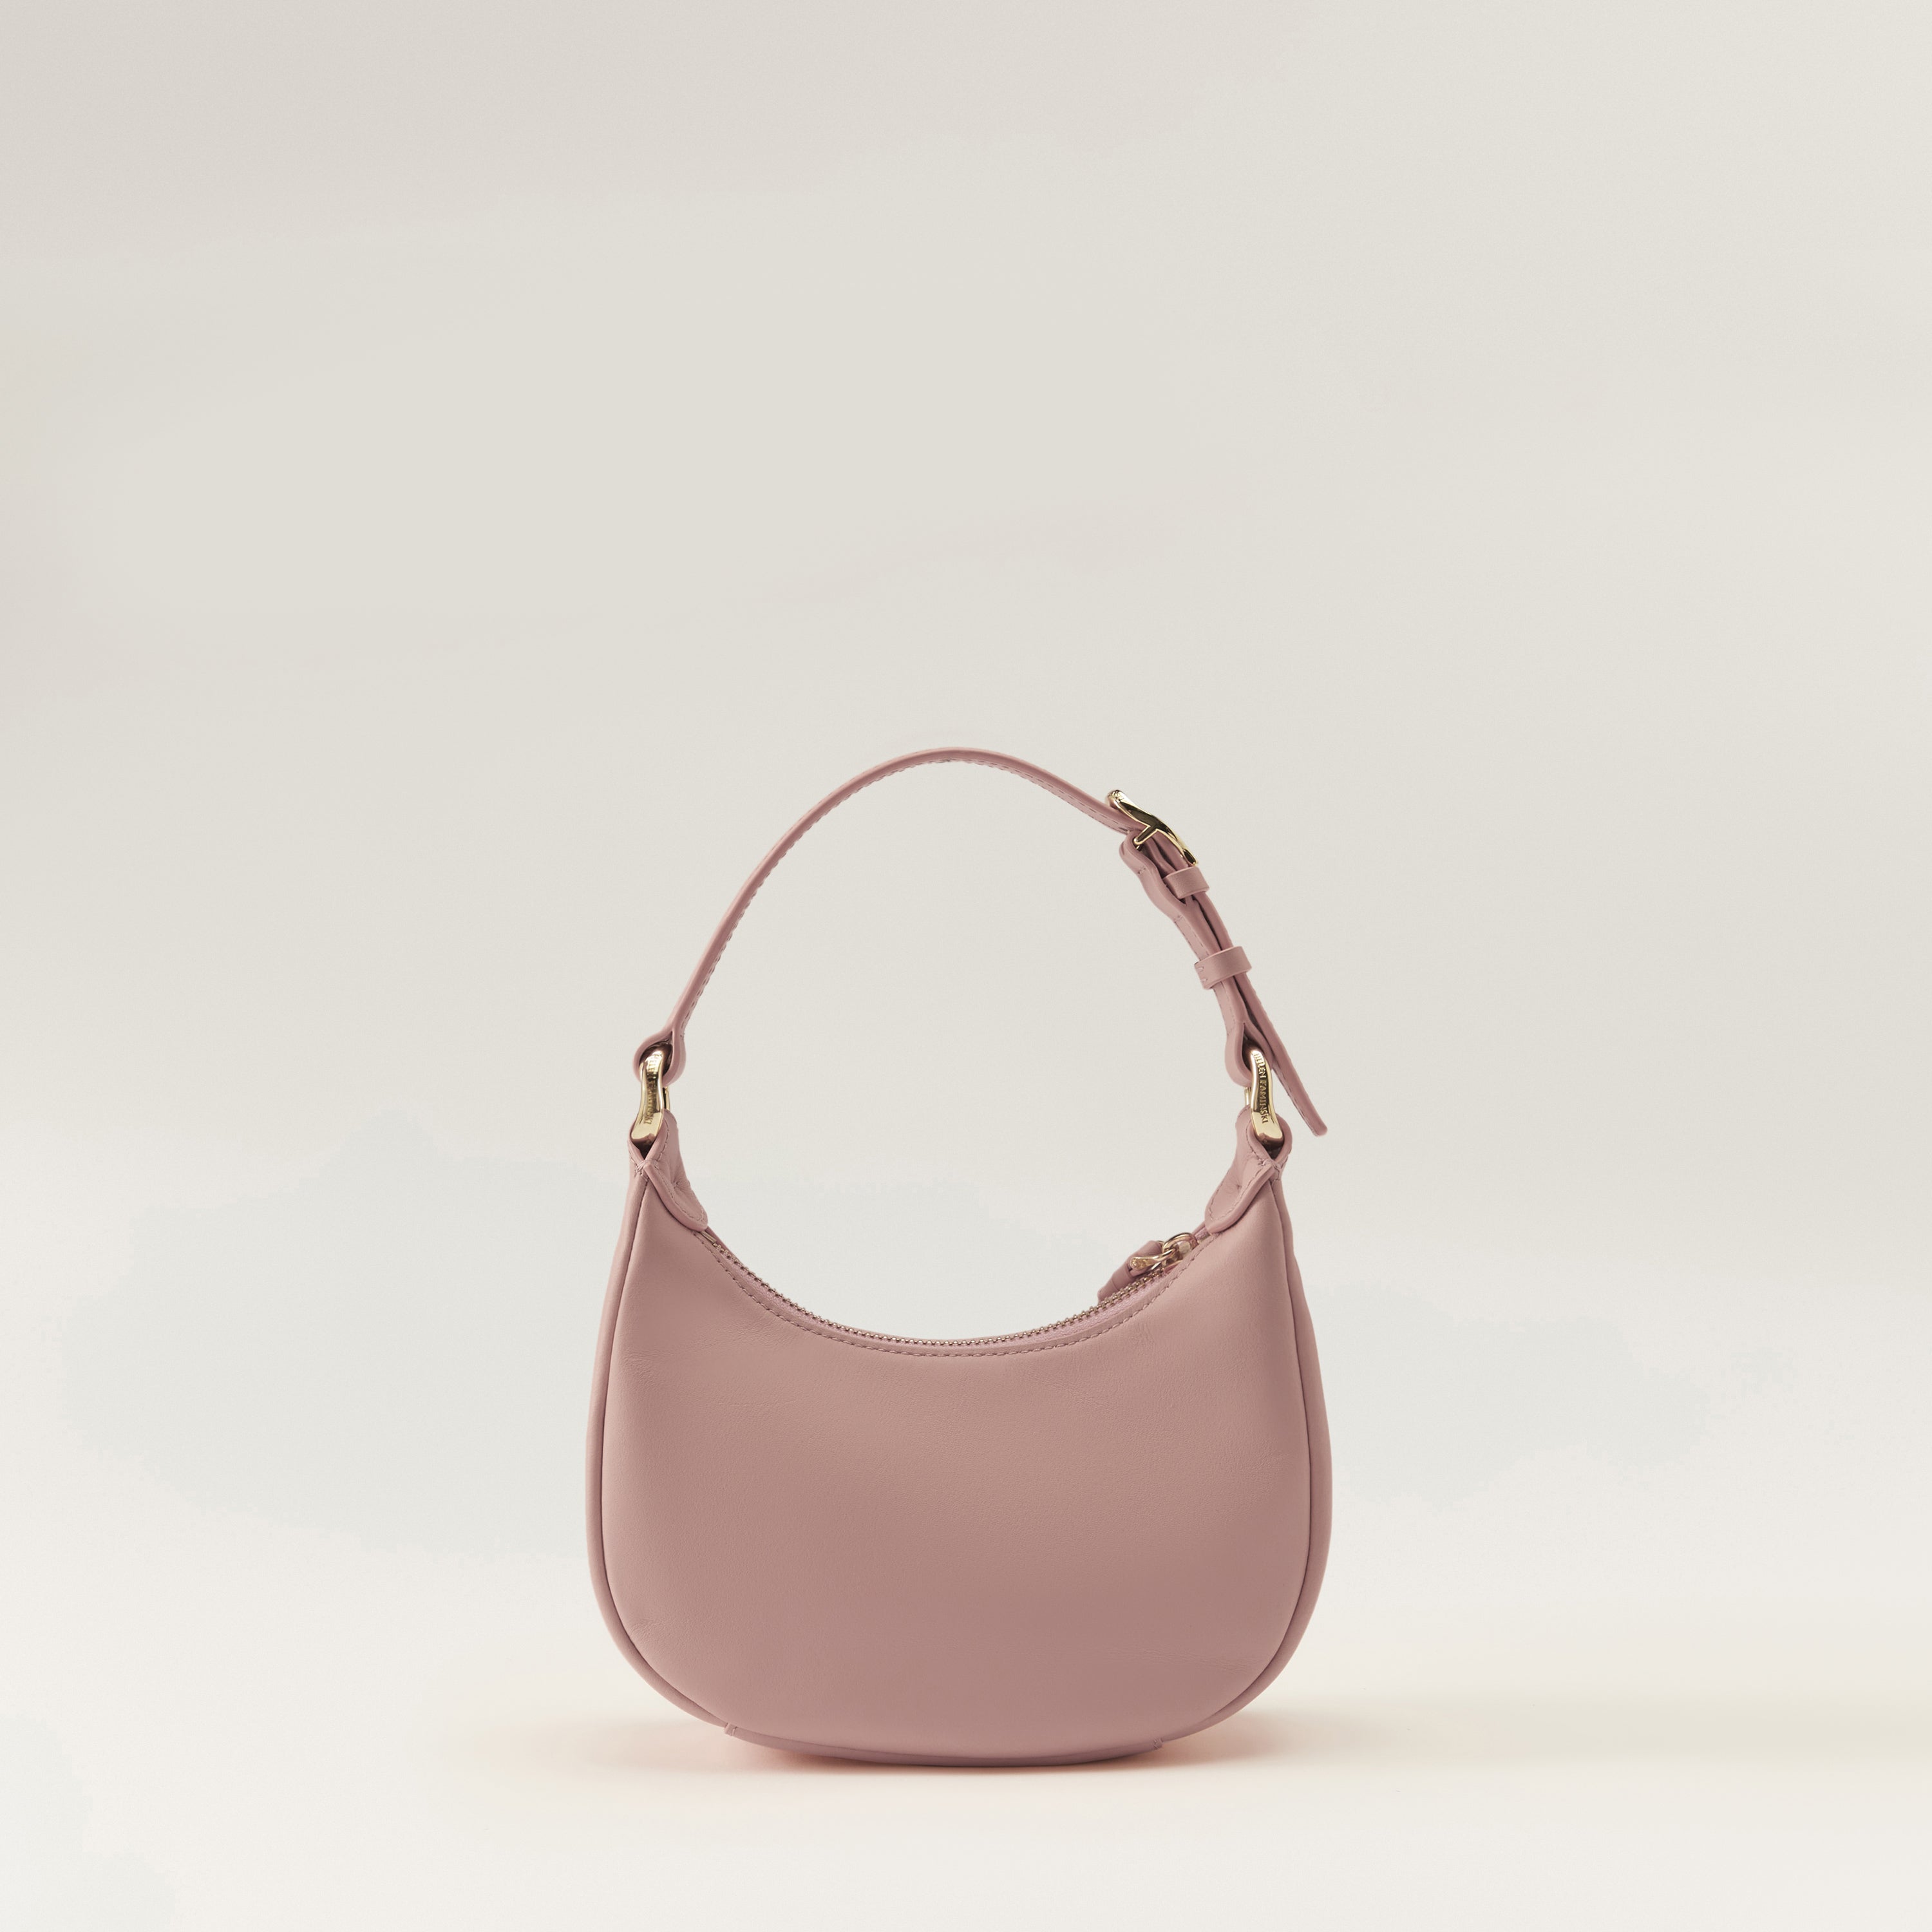 Small Tan Helen Hobo Purse - Soft Leather Bag